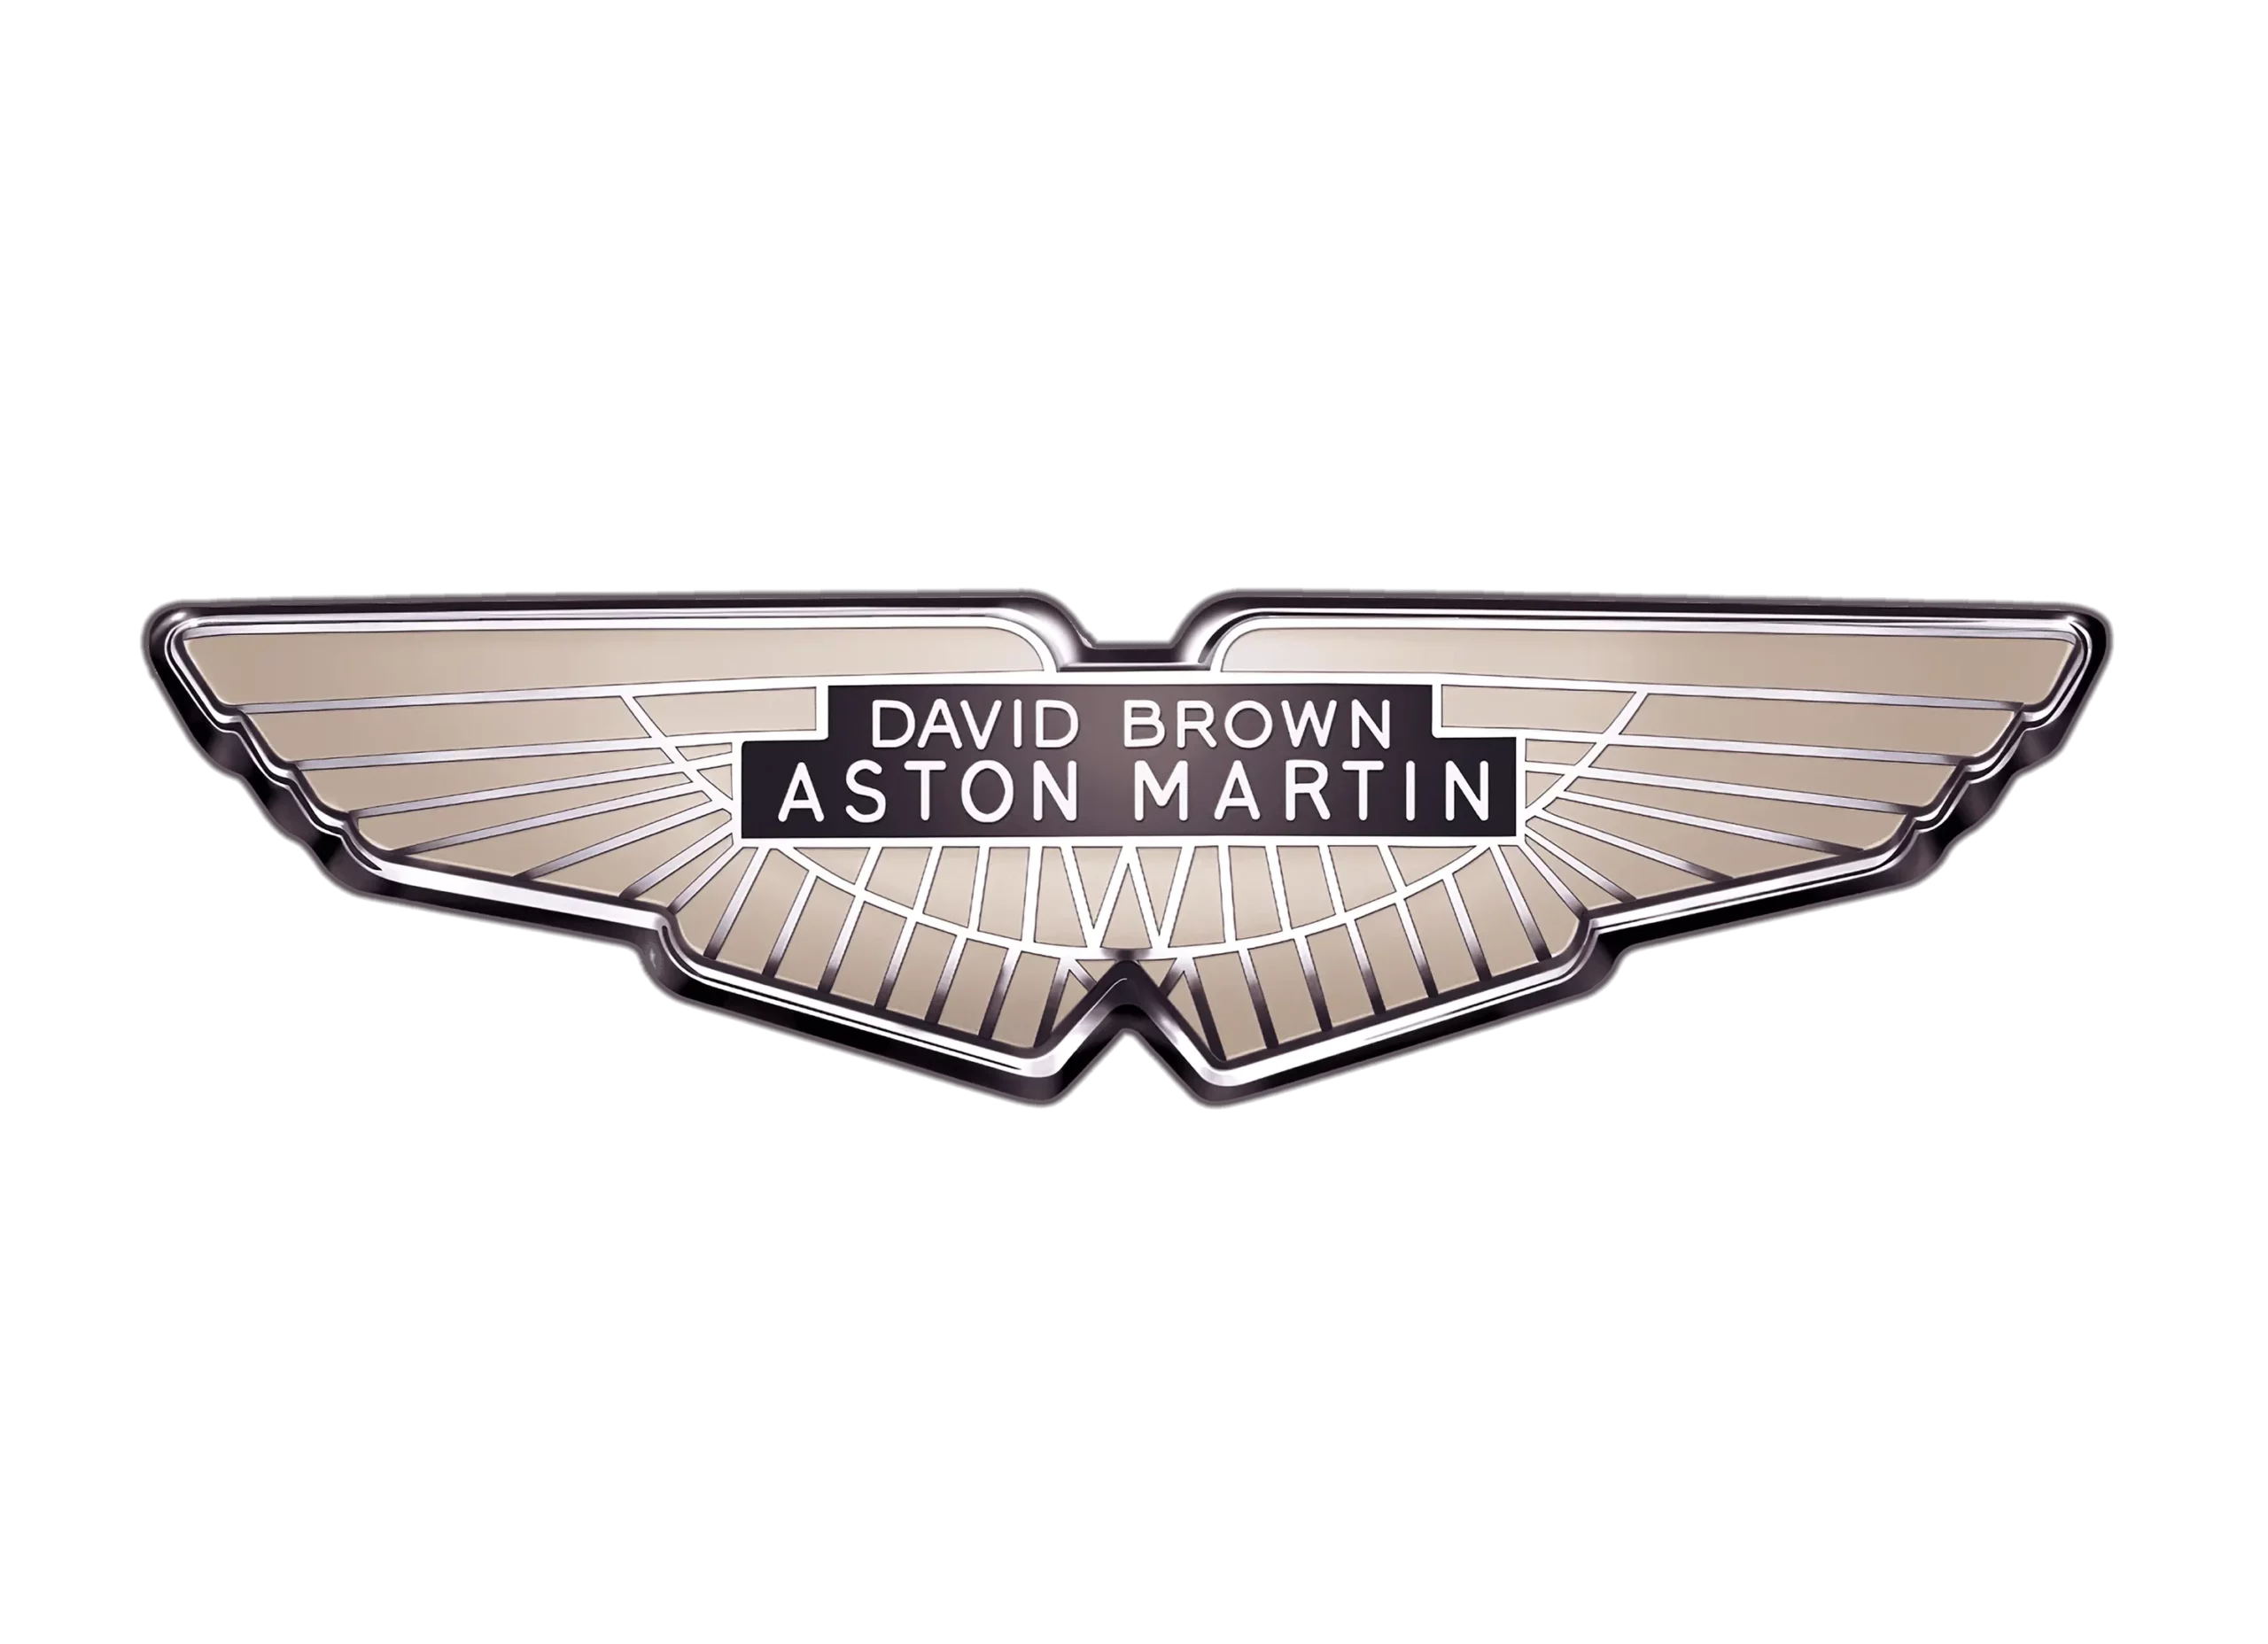 Aston Martin logo 1950-1971